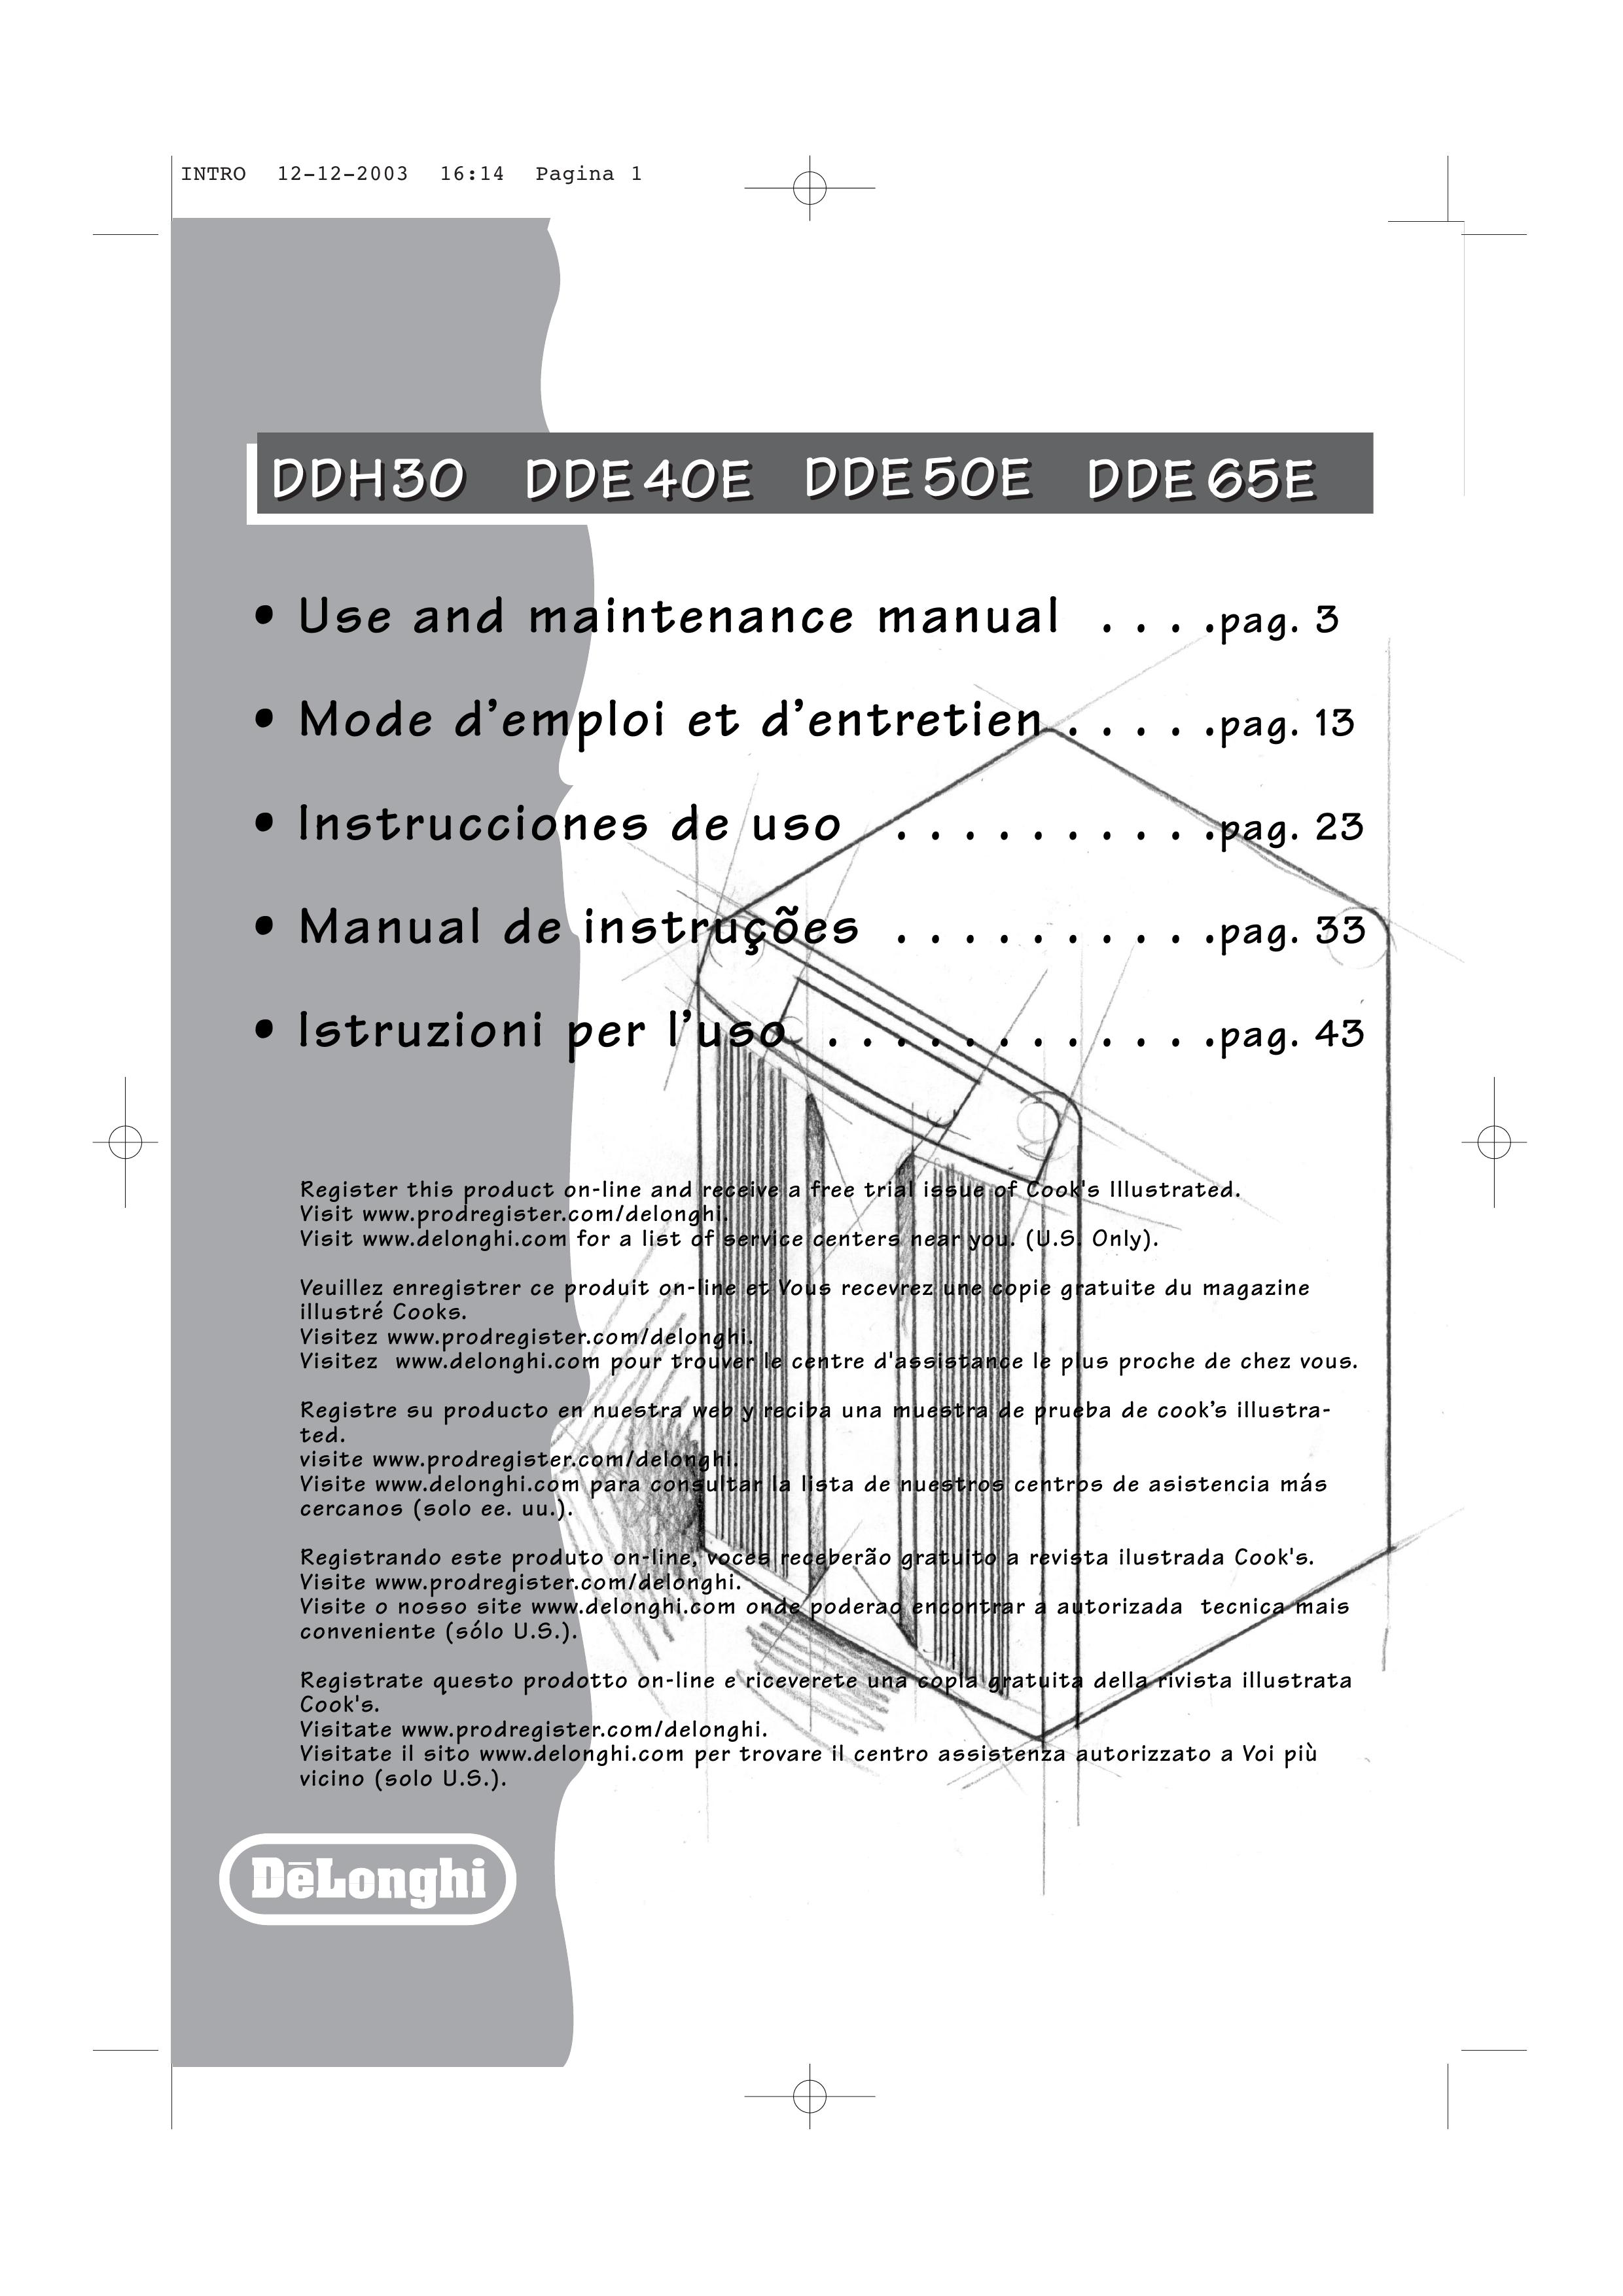 DeLonghi DDH30 Washer User Manual